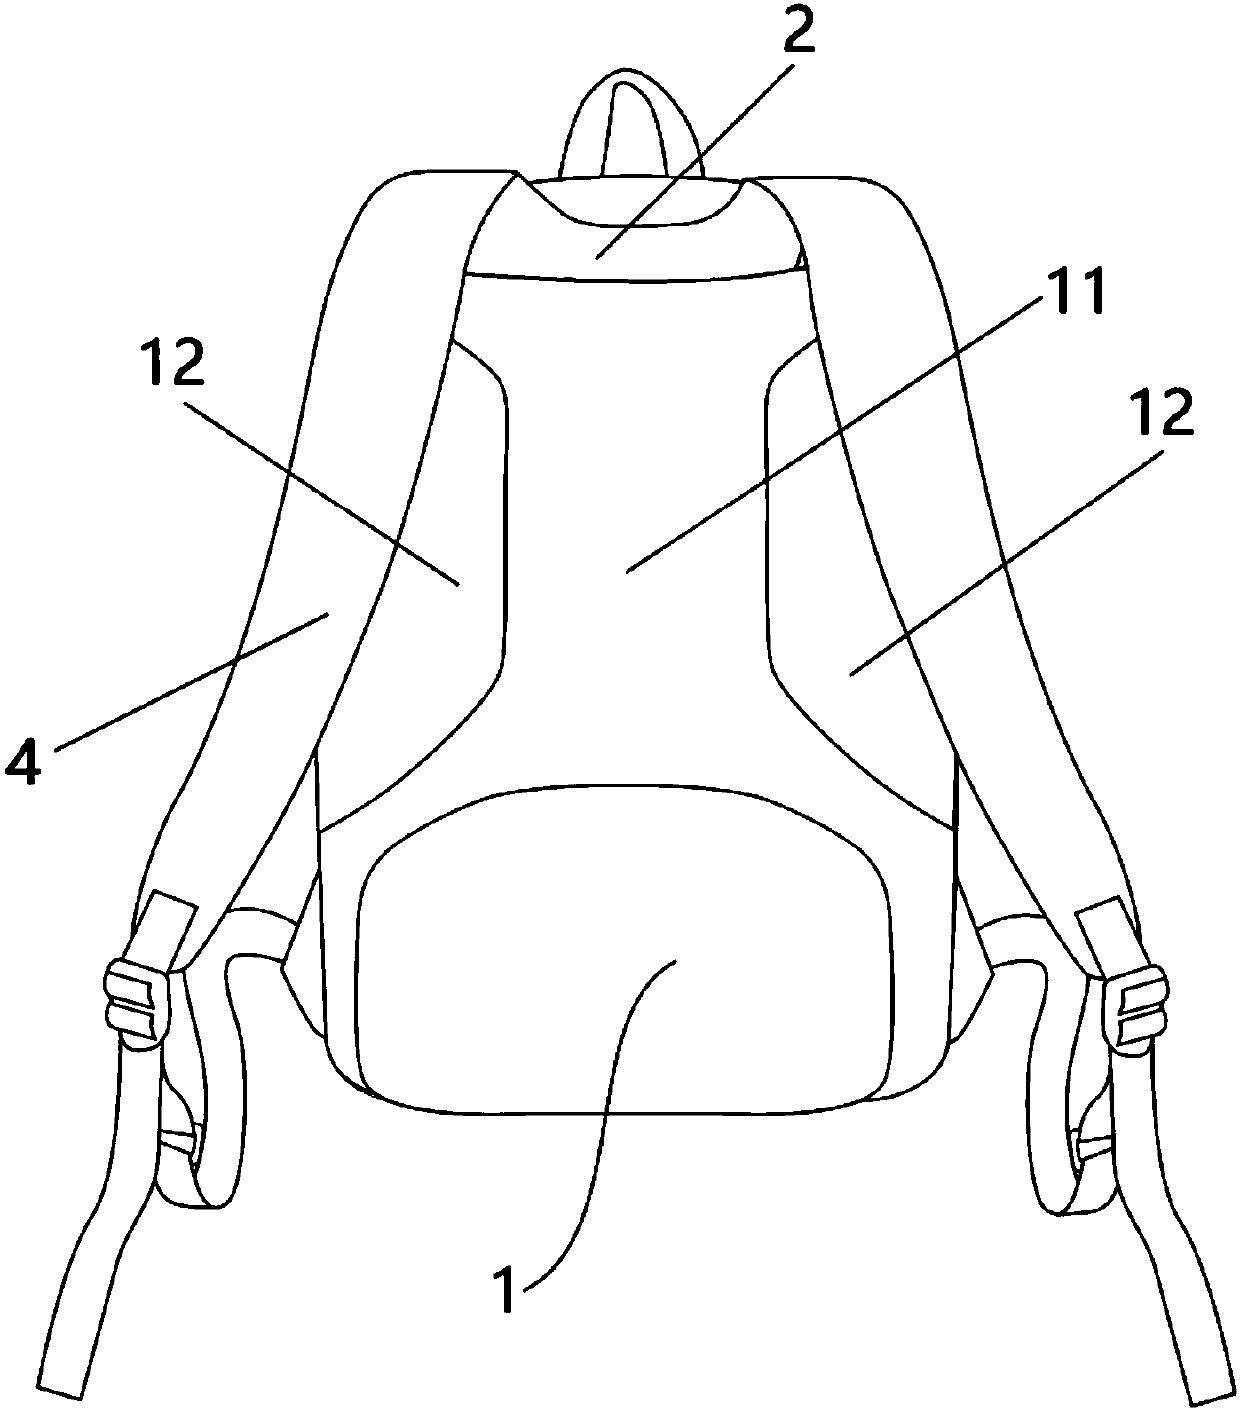 Pressure reduction backpack